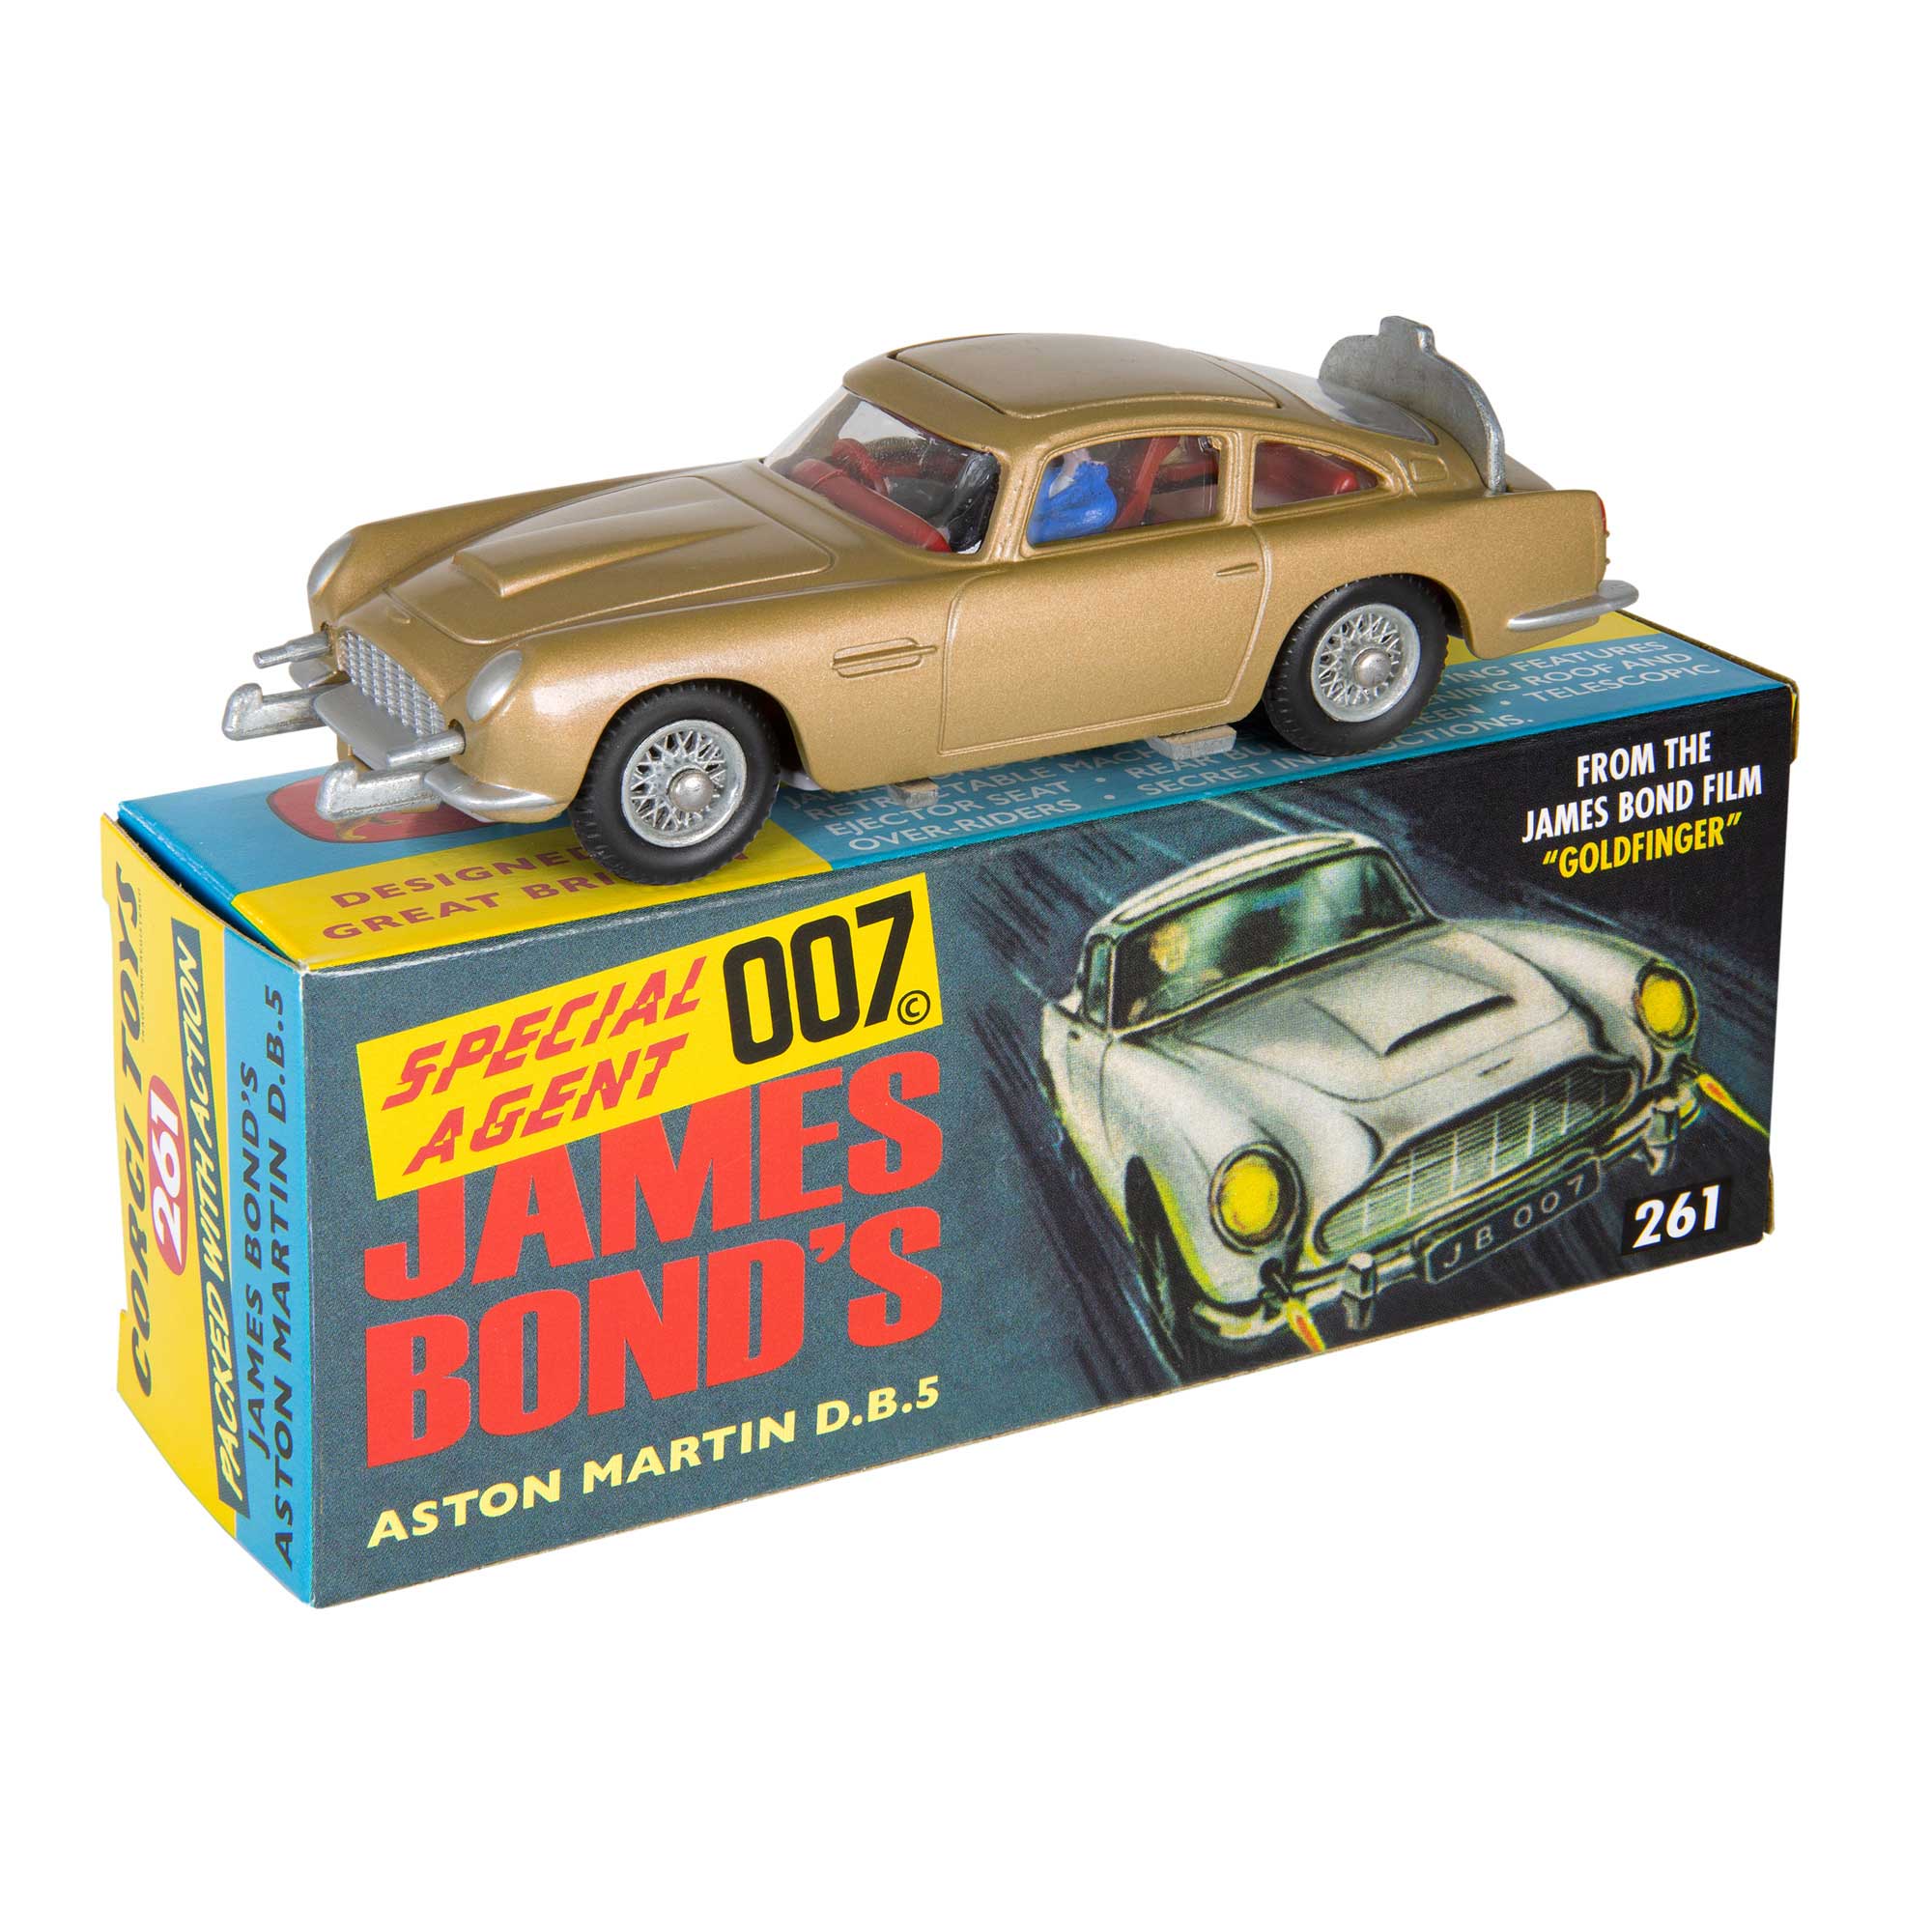 James Bond's Aston Martin D.B.5 (261)